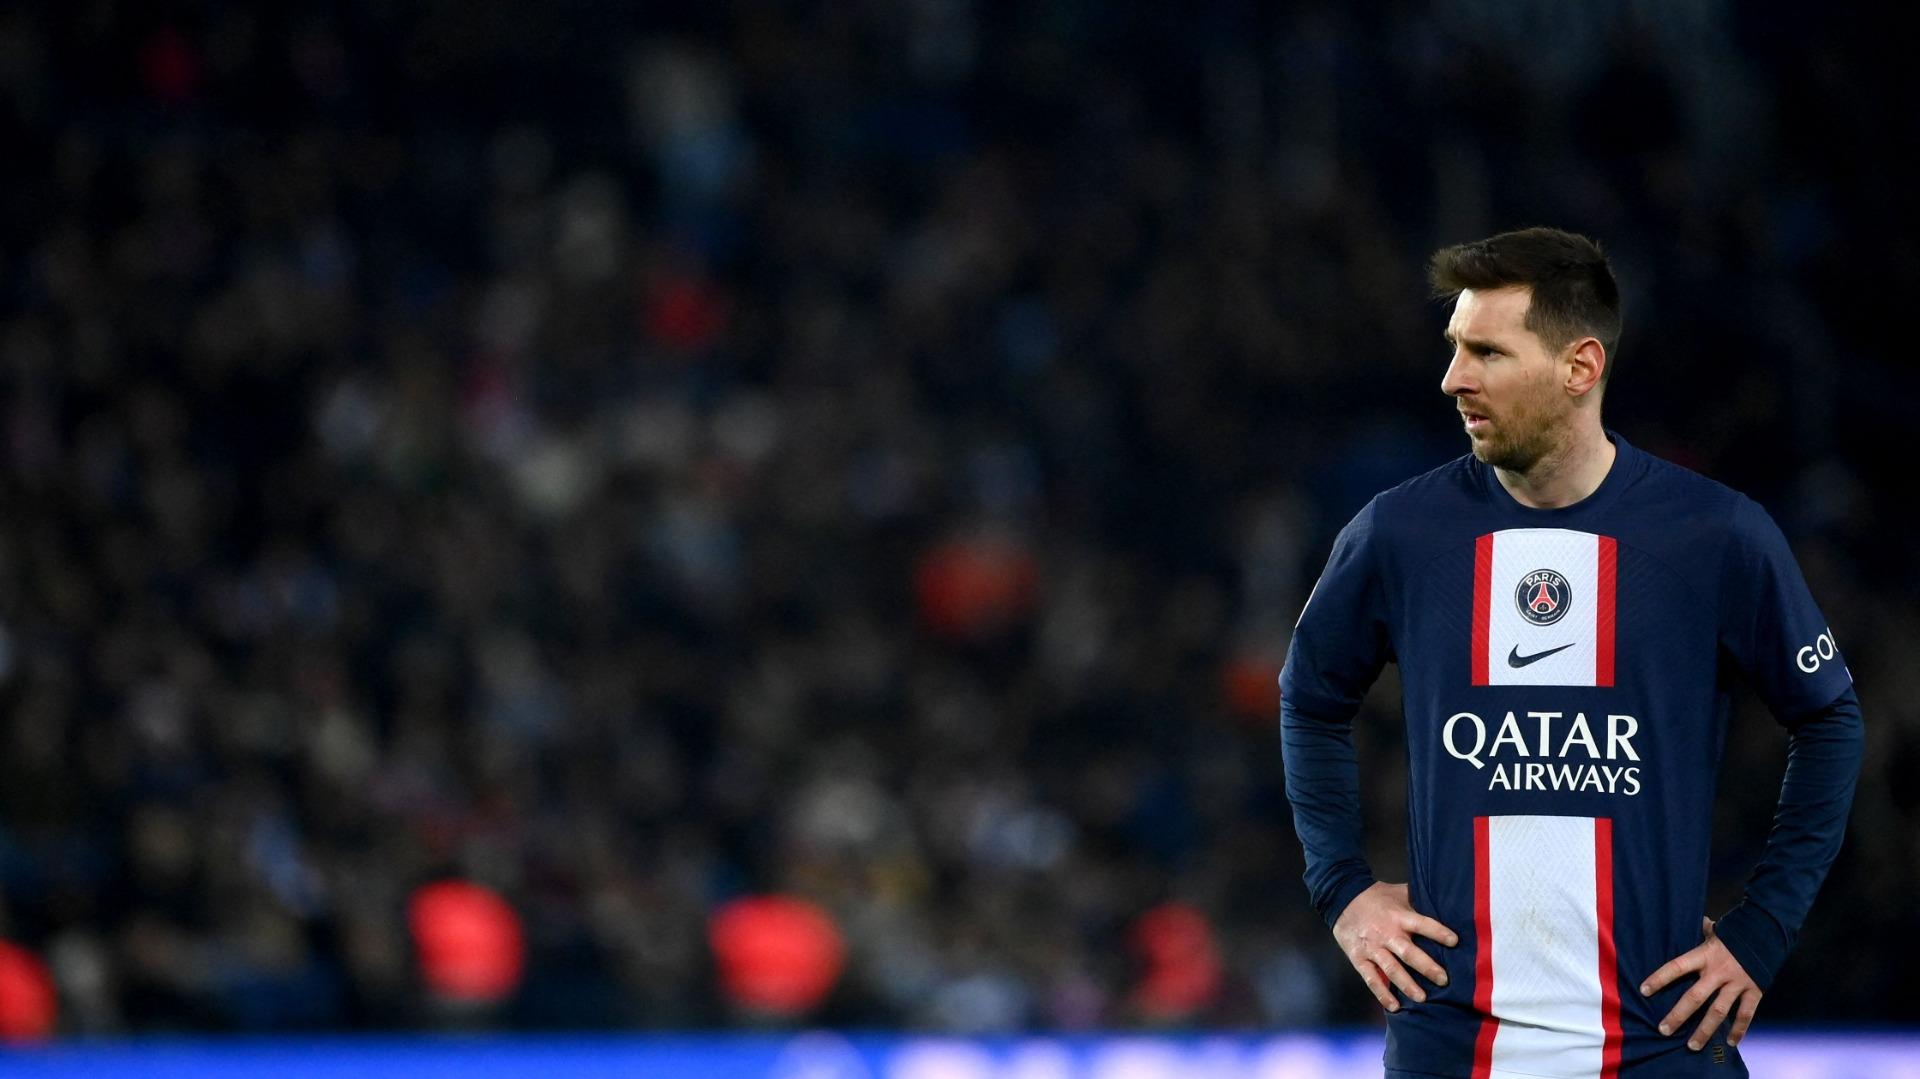 PSG Lionel Messi Face Two Major Hurdles in Contract Talks per Report